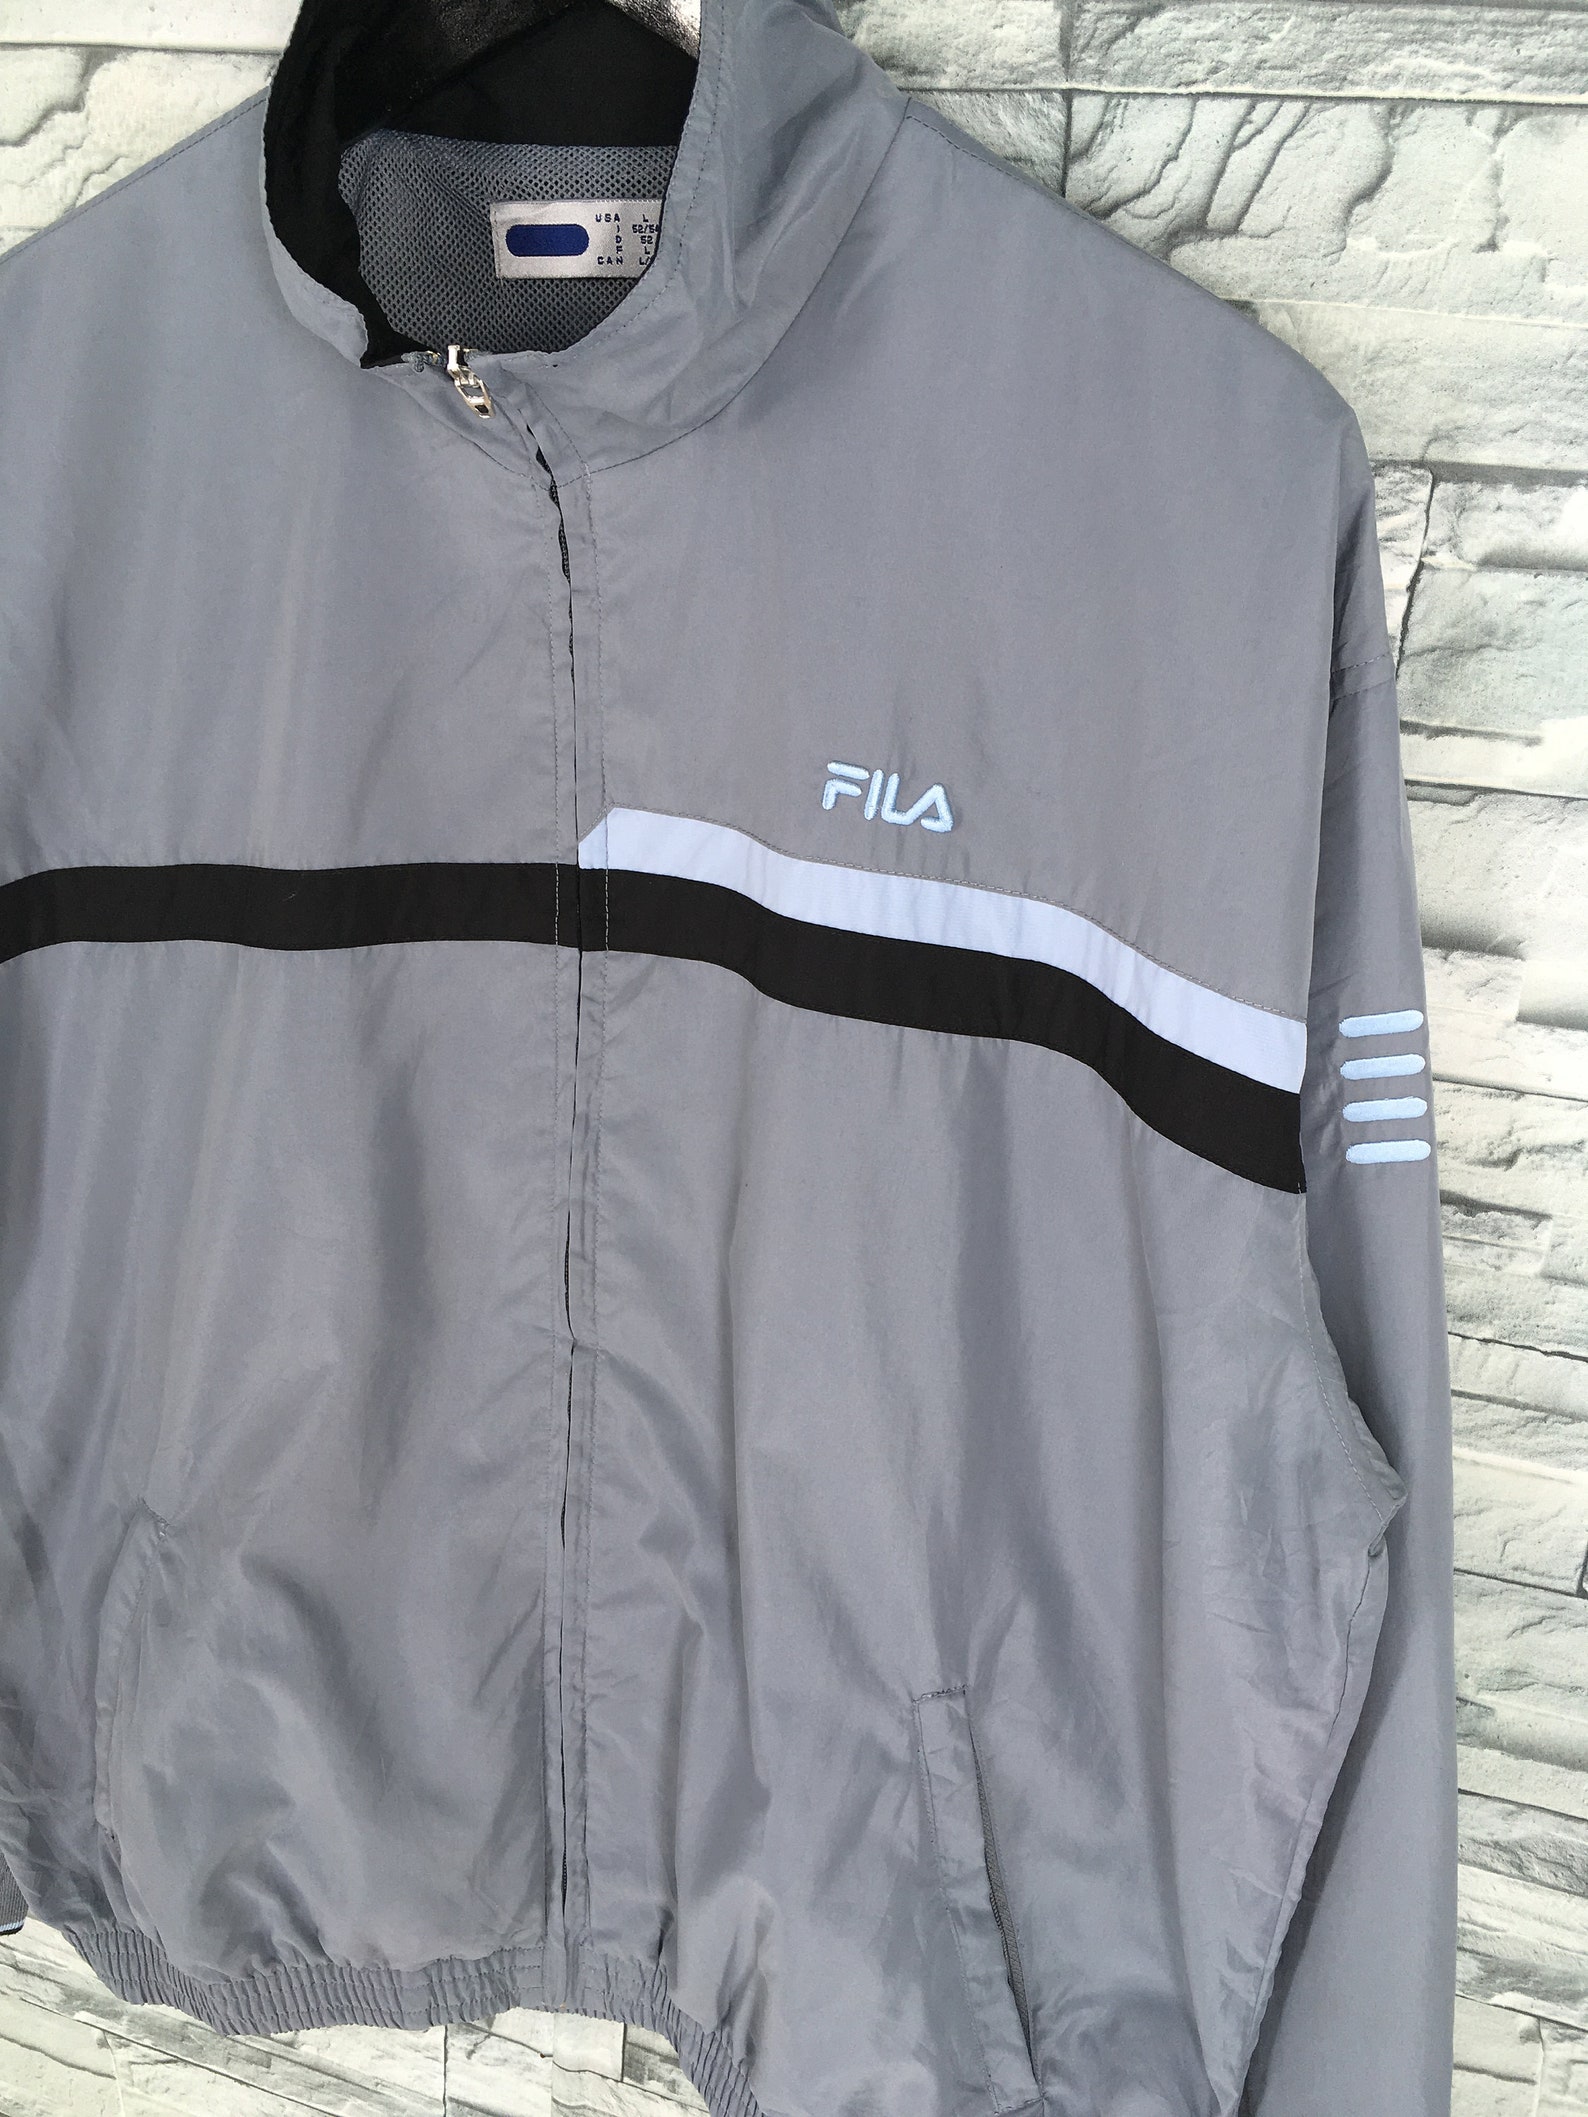 FILA Windbreaker Jacket Mens Large Vintage 90's Fila | Etsy